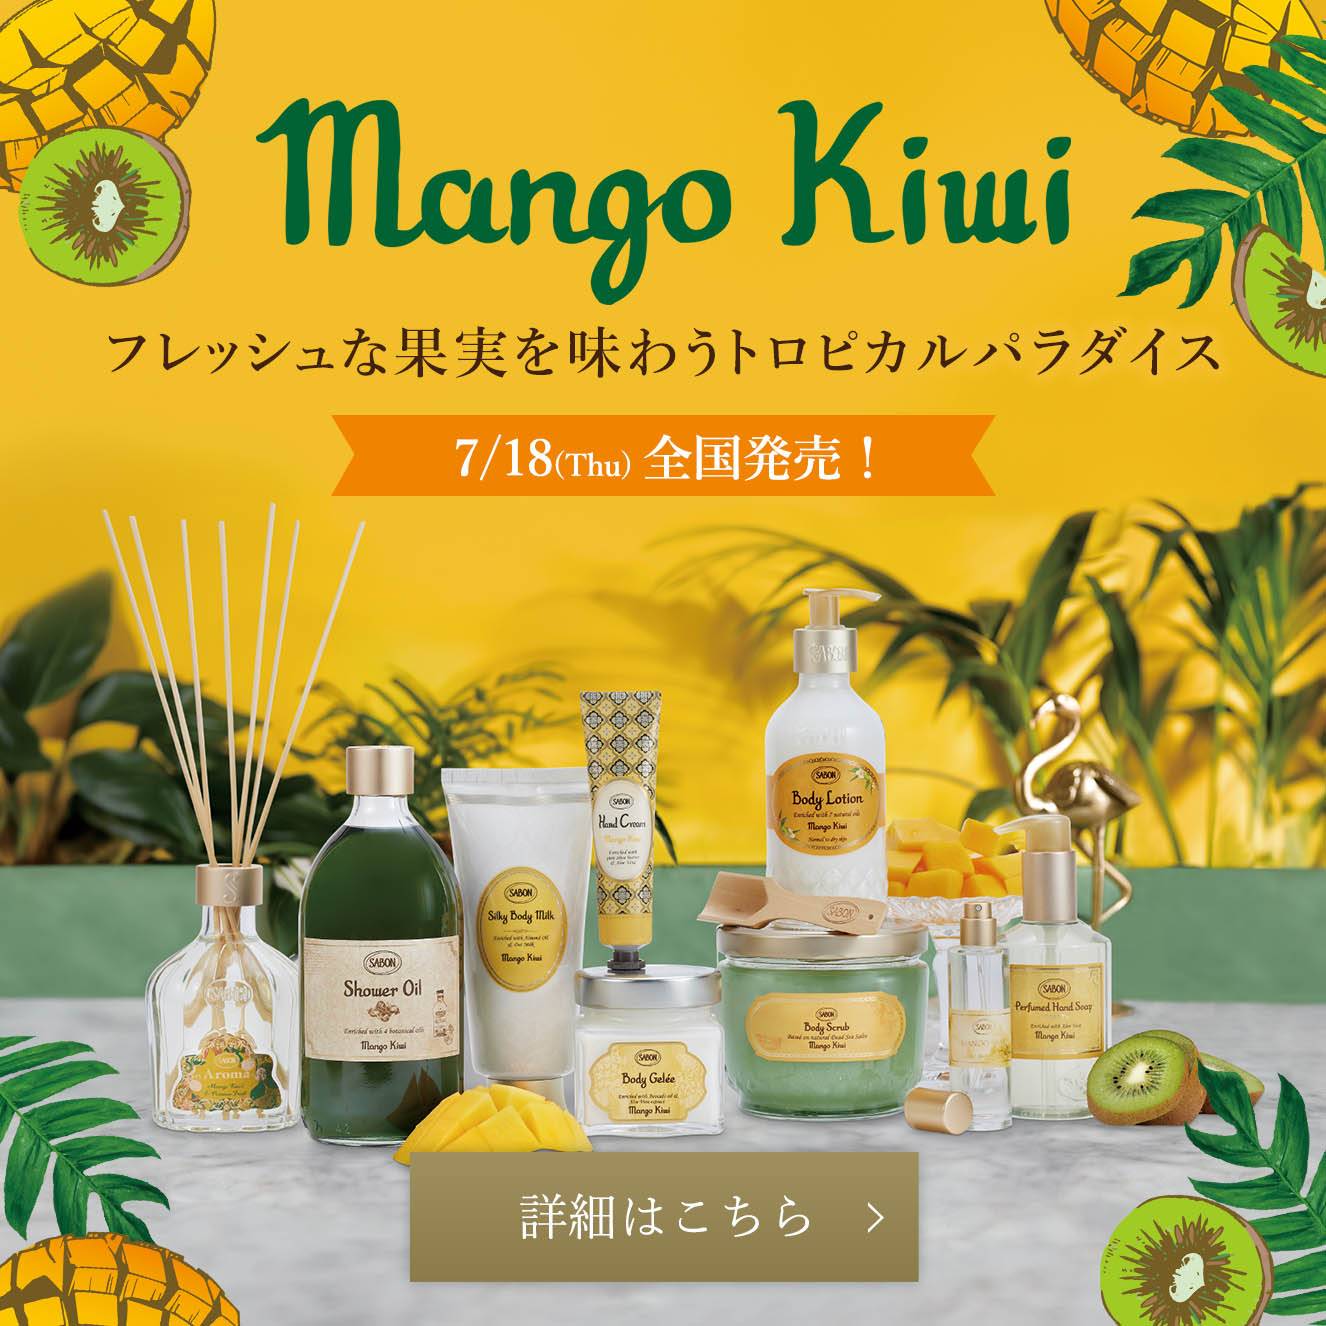 Mngo Kiwi フレッシュな果実を味わうトロピカルパラダイス 7/18(Thu)全国発売